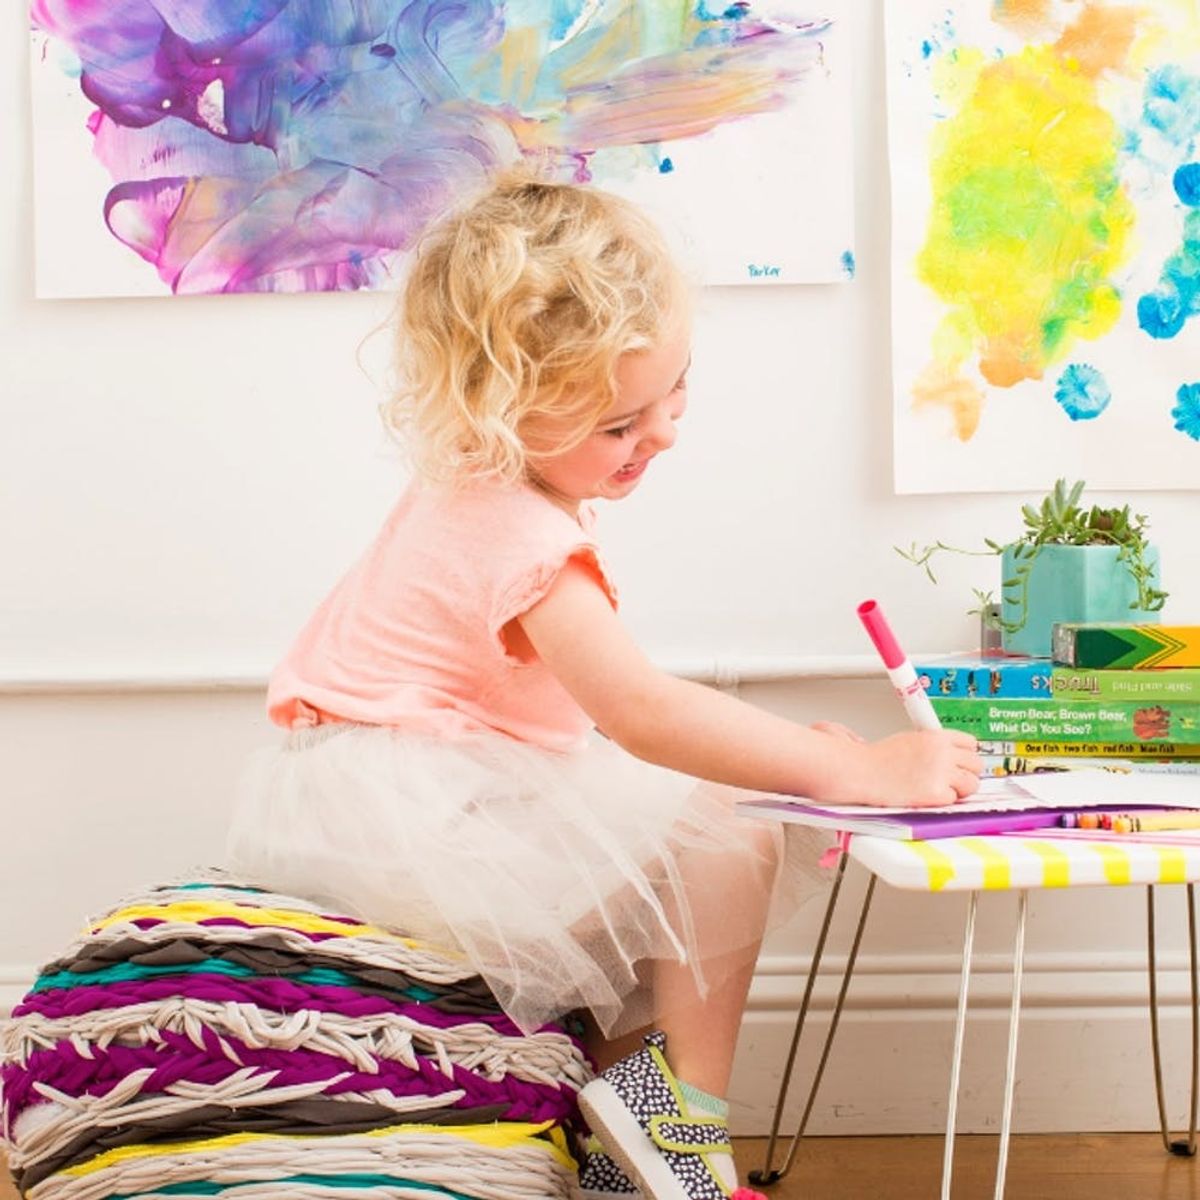 10 Creative Ways to Display Your Children’s Art